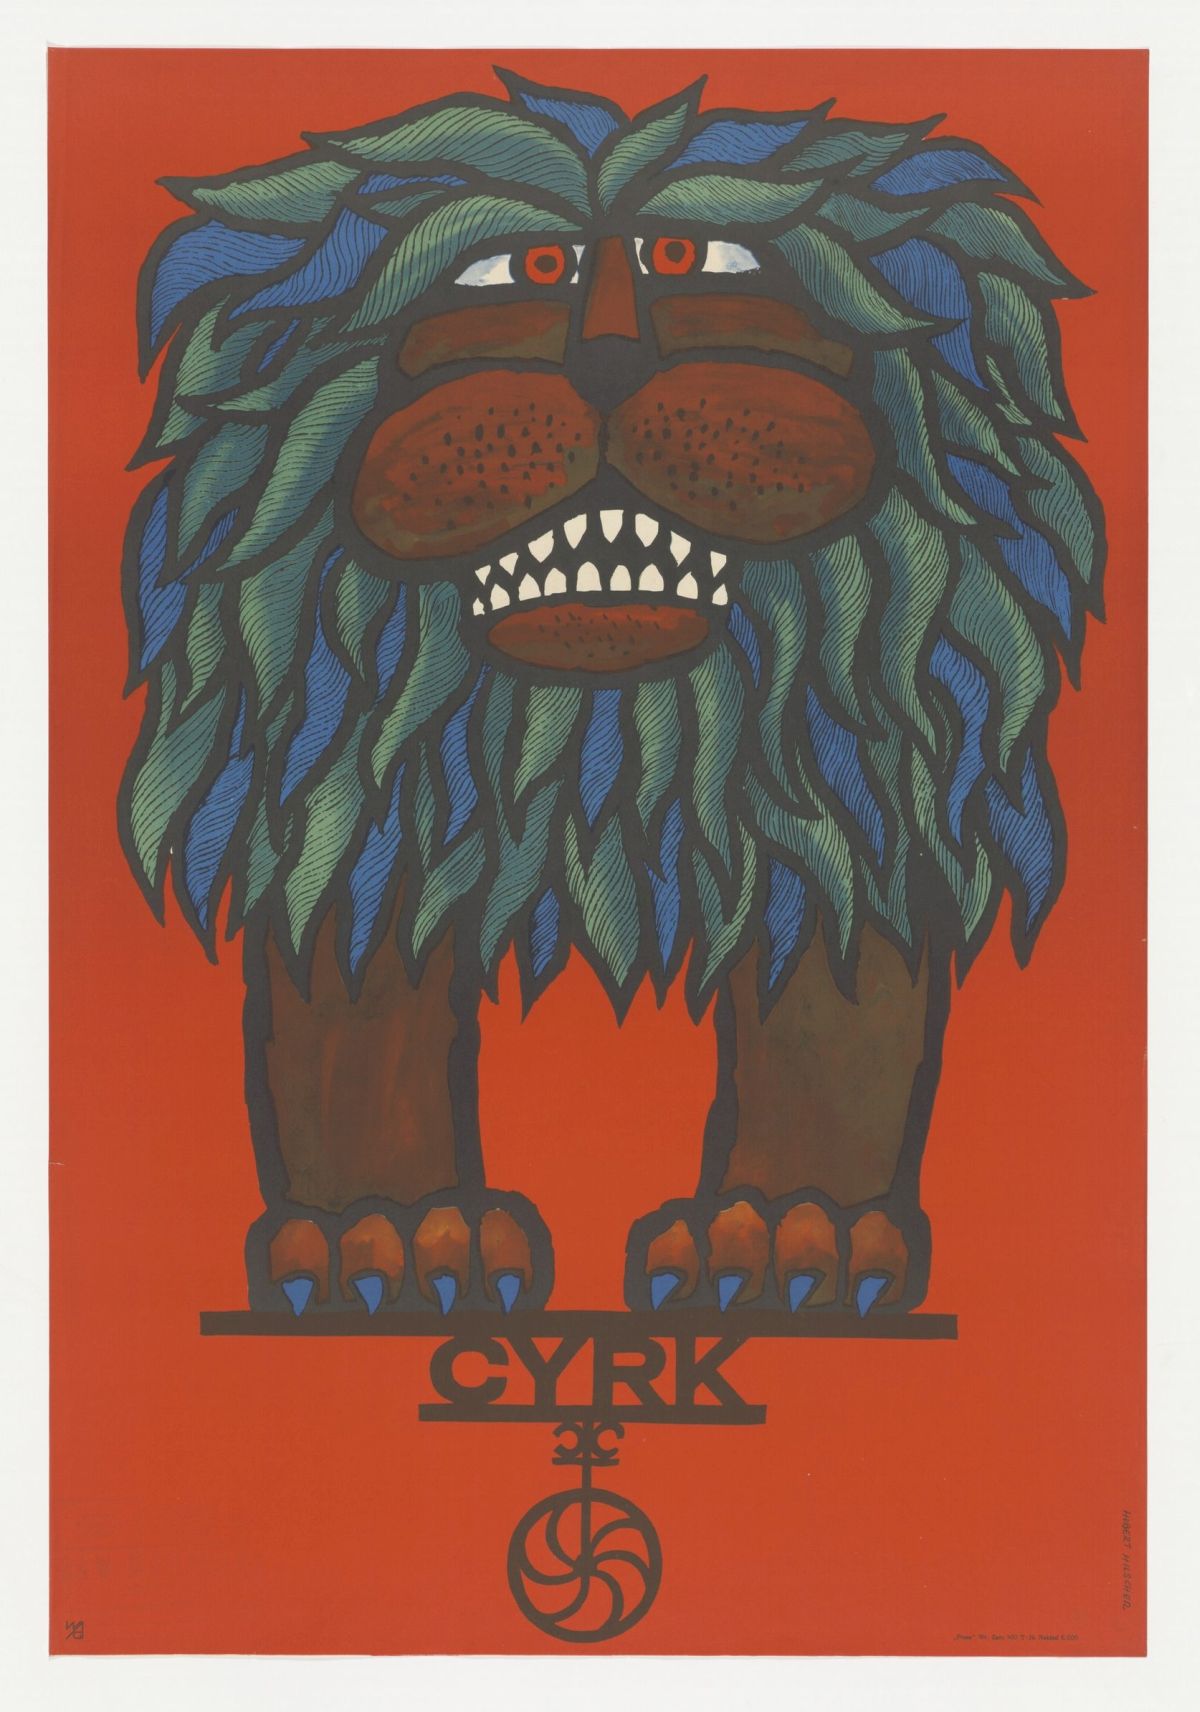 Hubert Hilscher, „Cyrk”, 1967 (źródło: materiały prasowe organizatora)